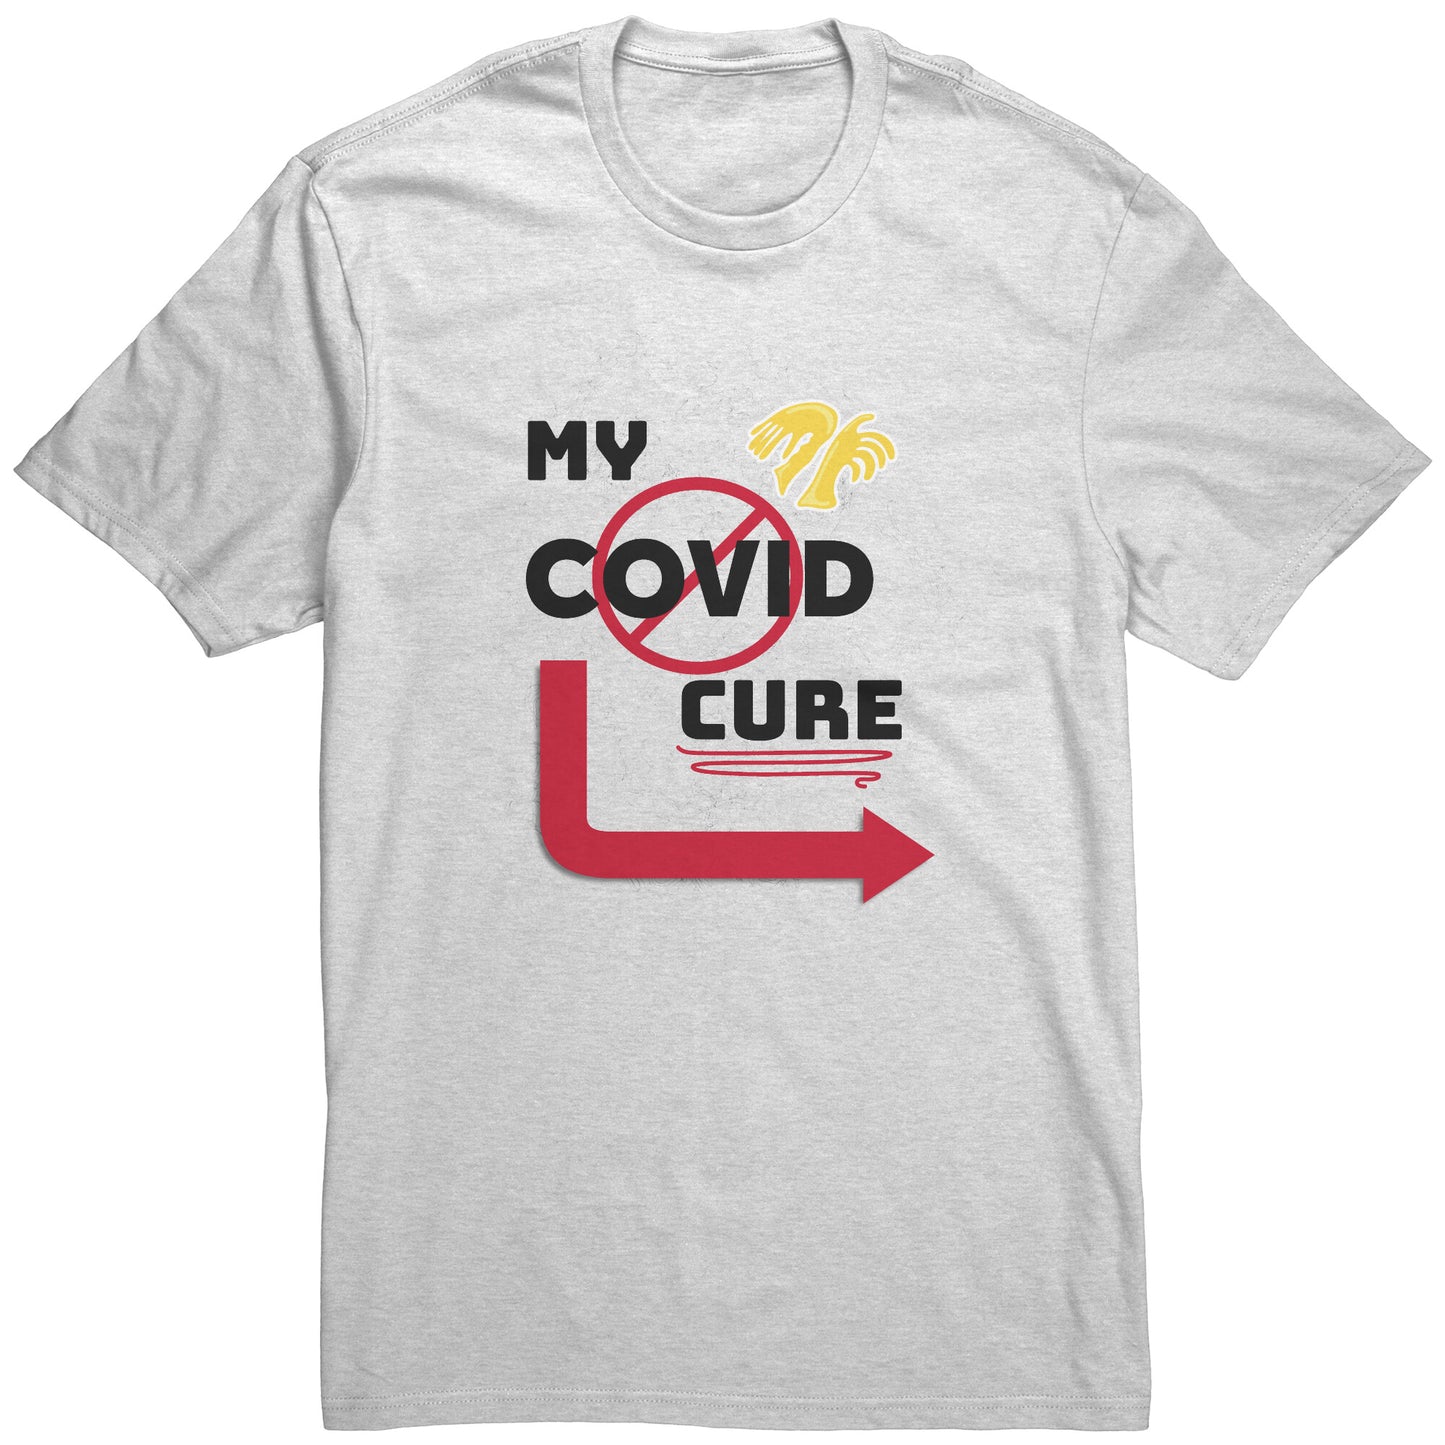 My COVID Cure Men's T-shirt